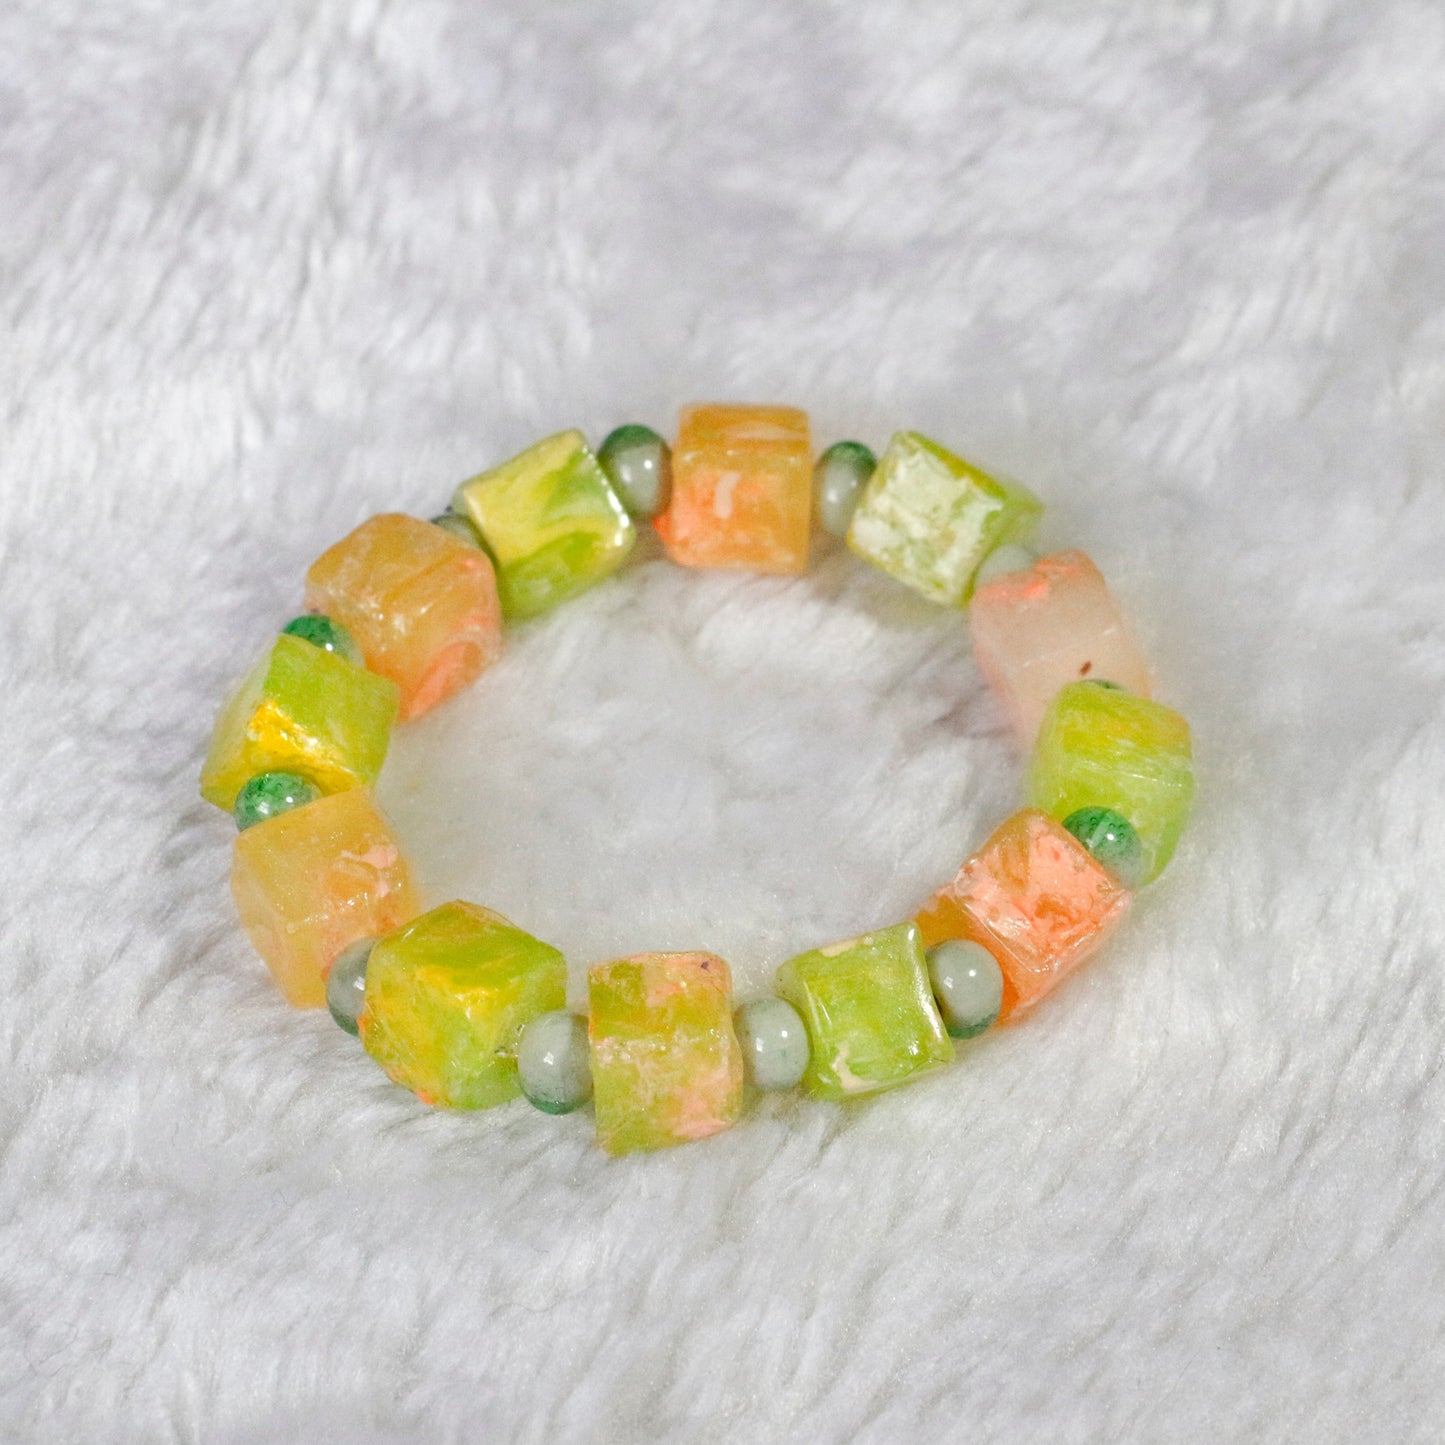 Candy Handmade Beads Bracelet